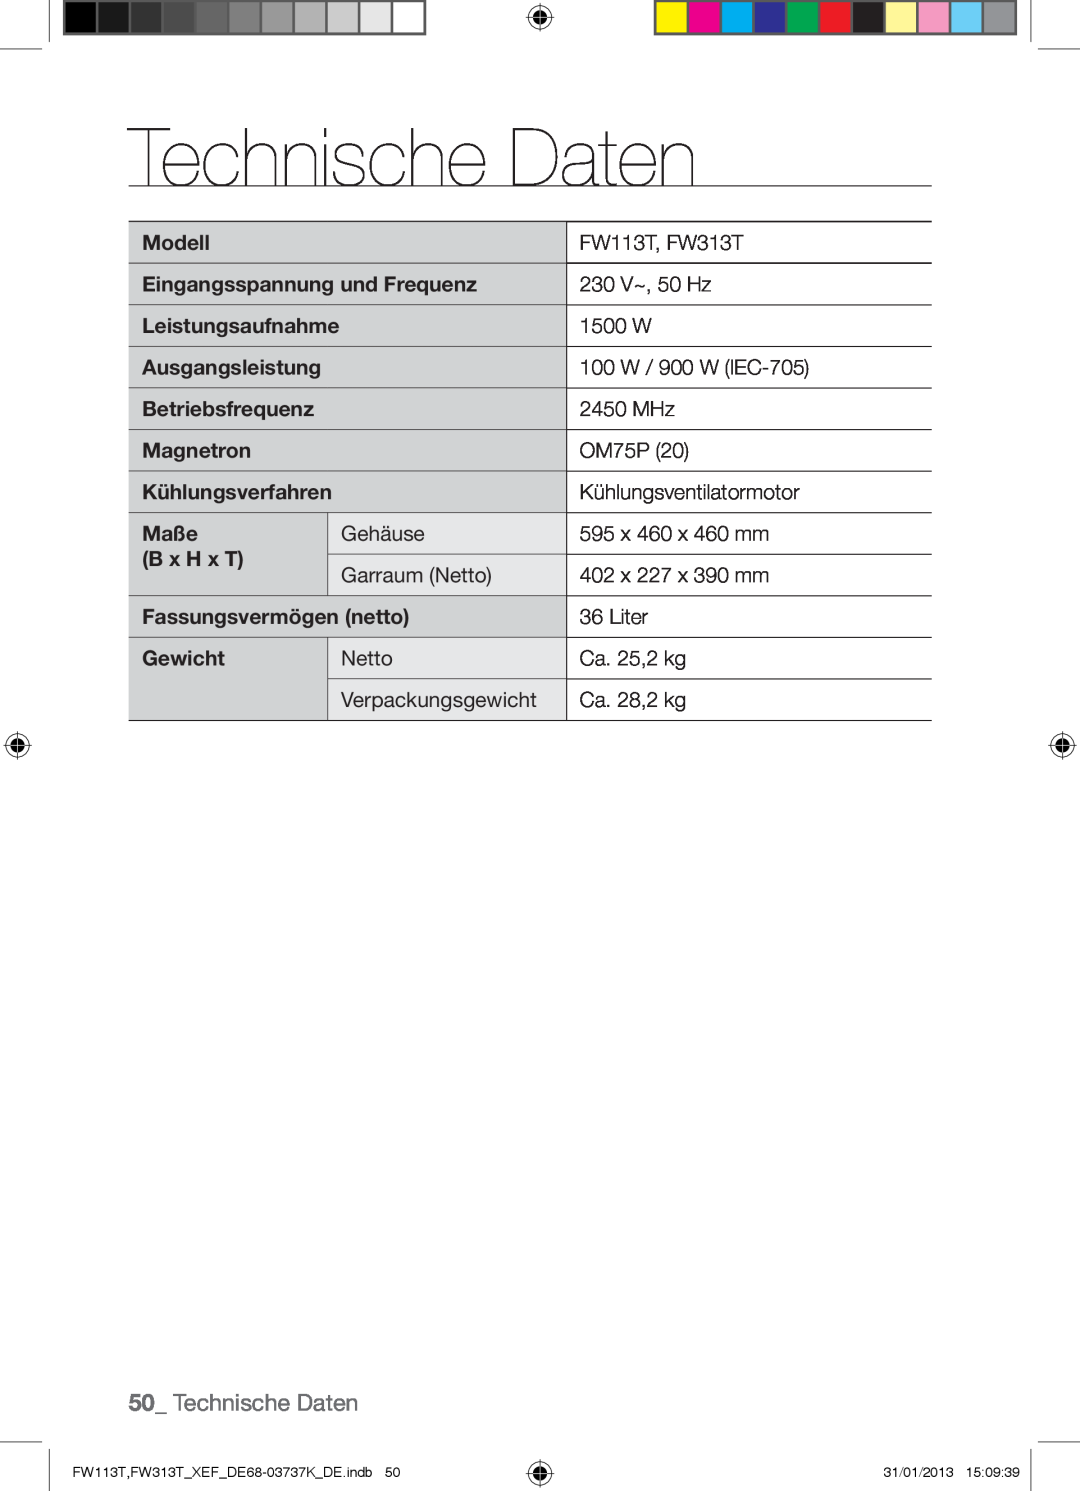 Samsung FW113T002/XEF manual Technische Daten 